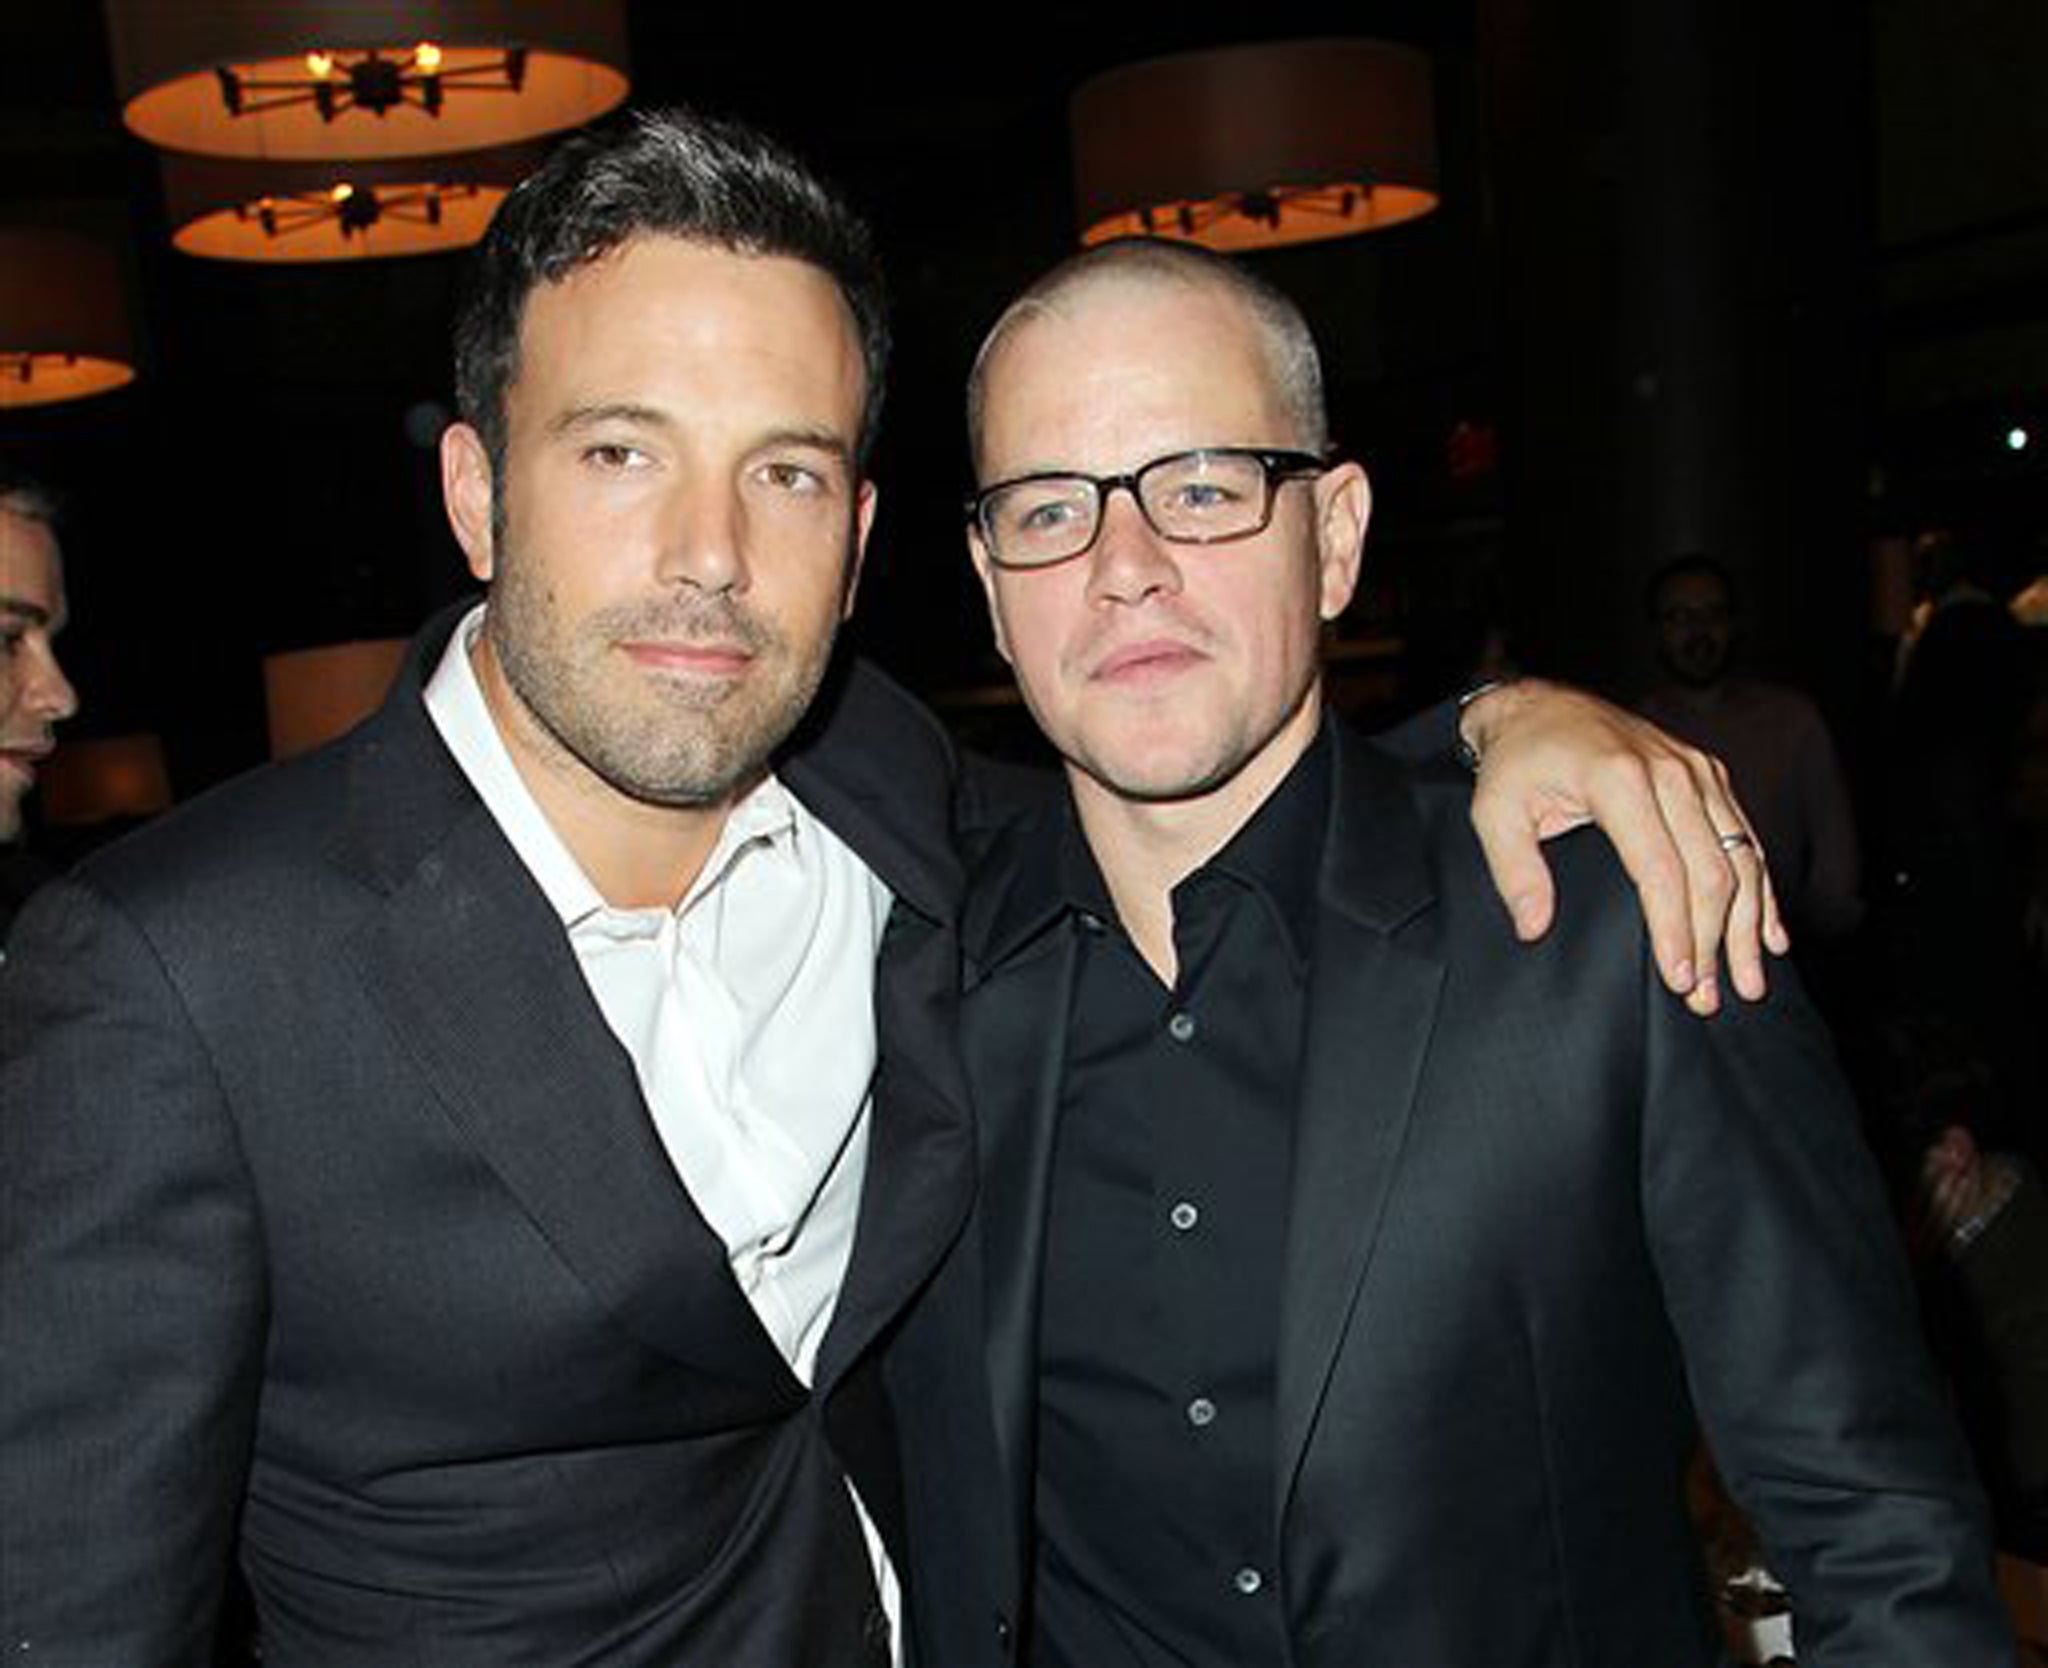 Ben Affleck and Matt Damon 'in talks' to produce film about Fifa